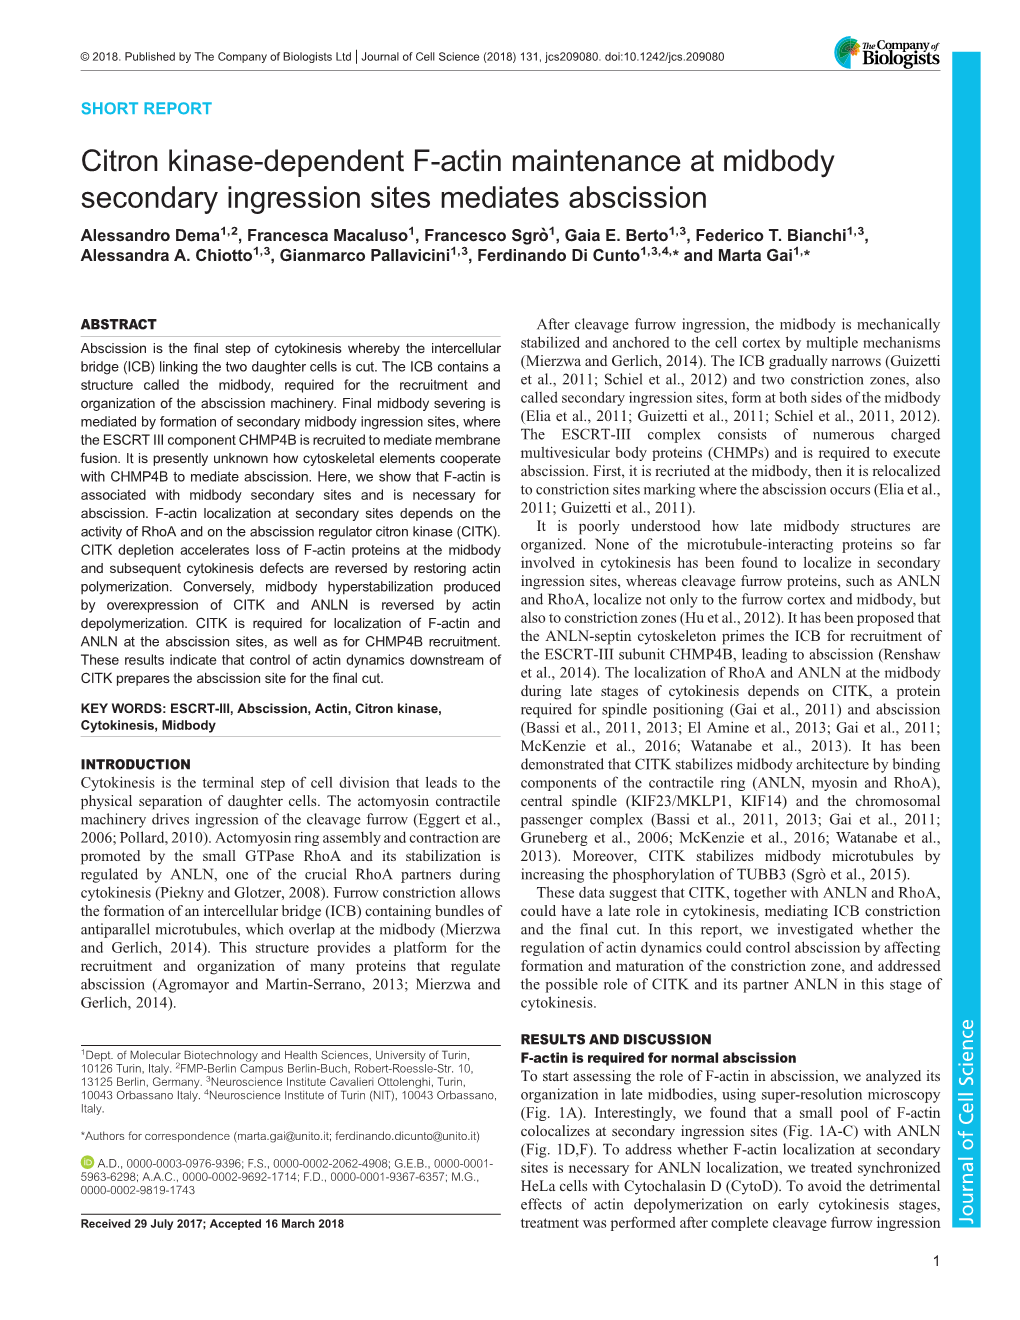 Citron Kinase-Dependent F-Actin Maintenance at Midbody Secondary Ingression Sites Mediates Abscission